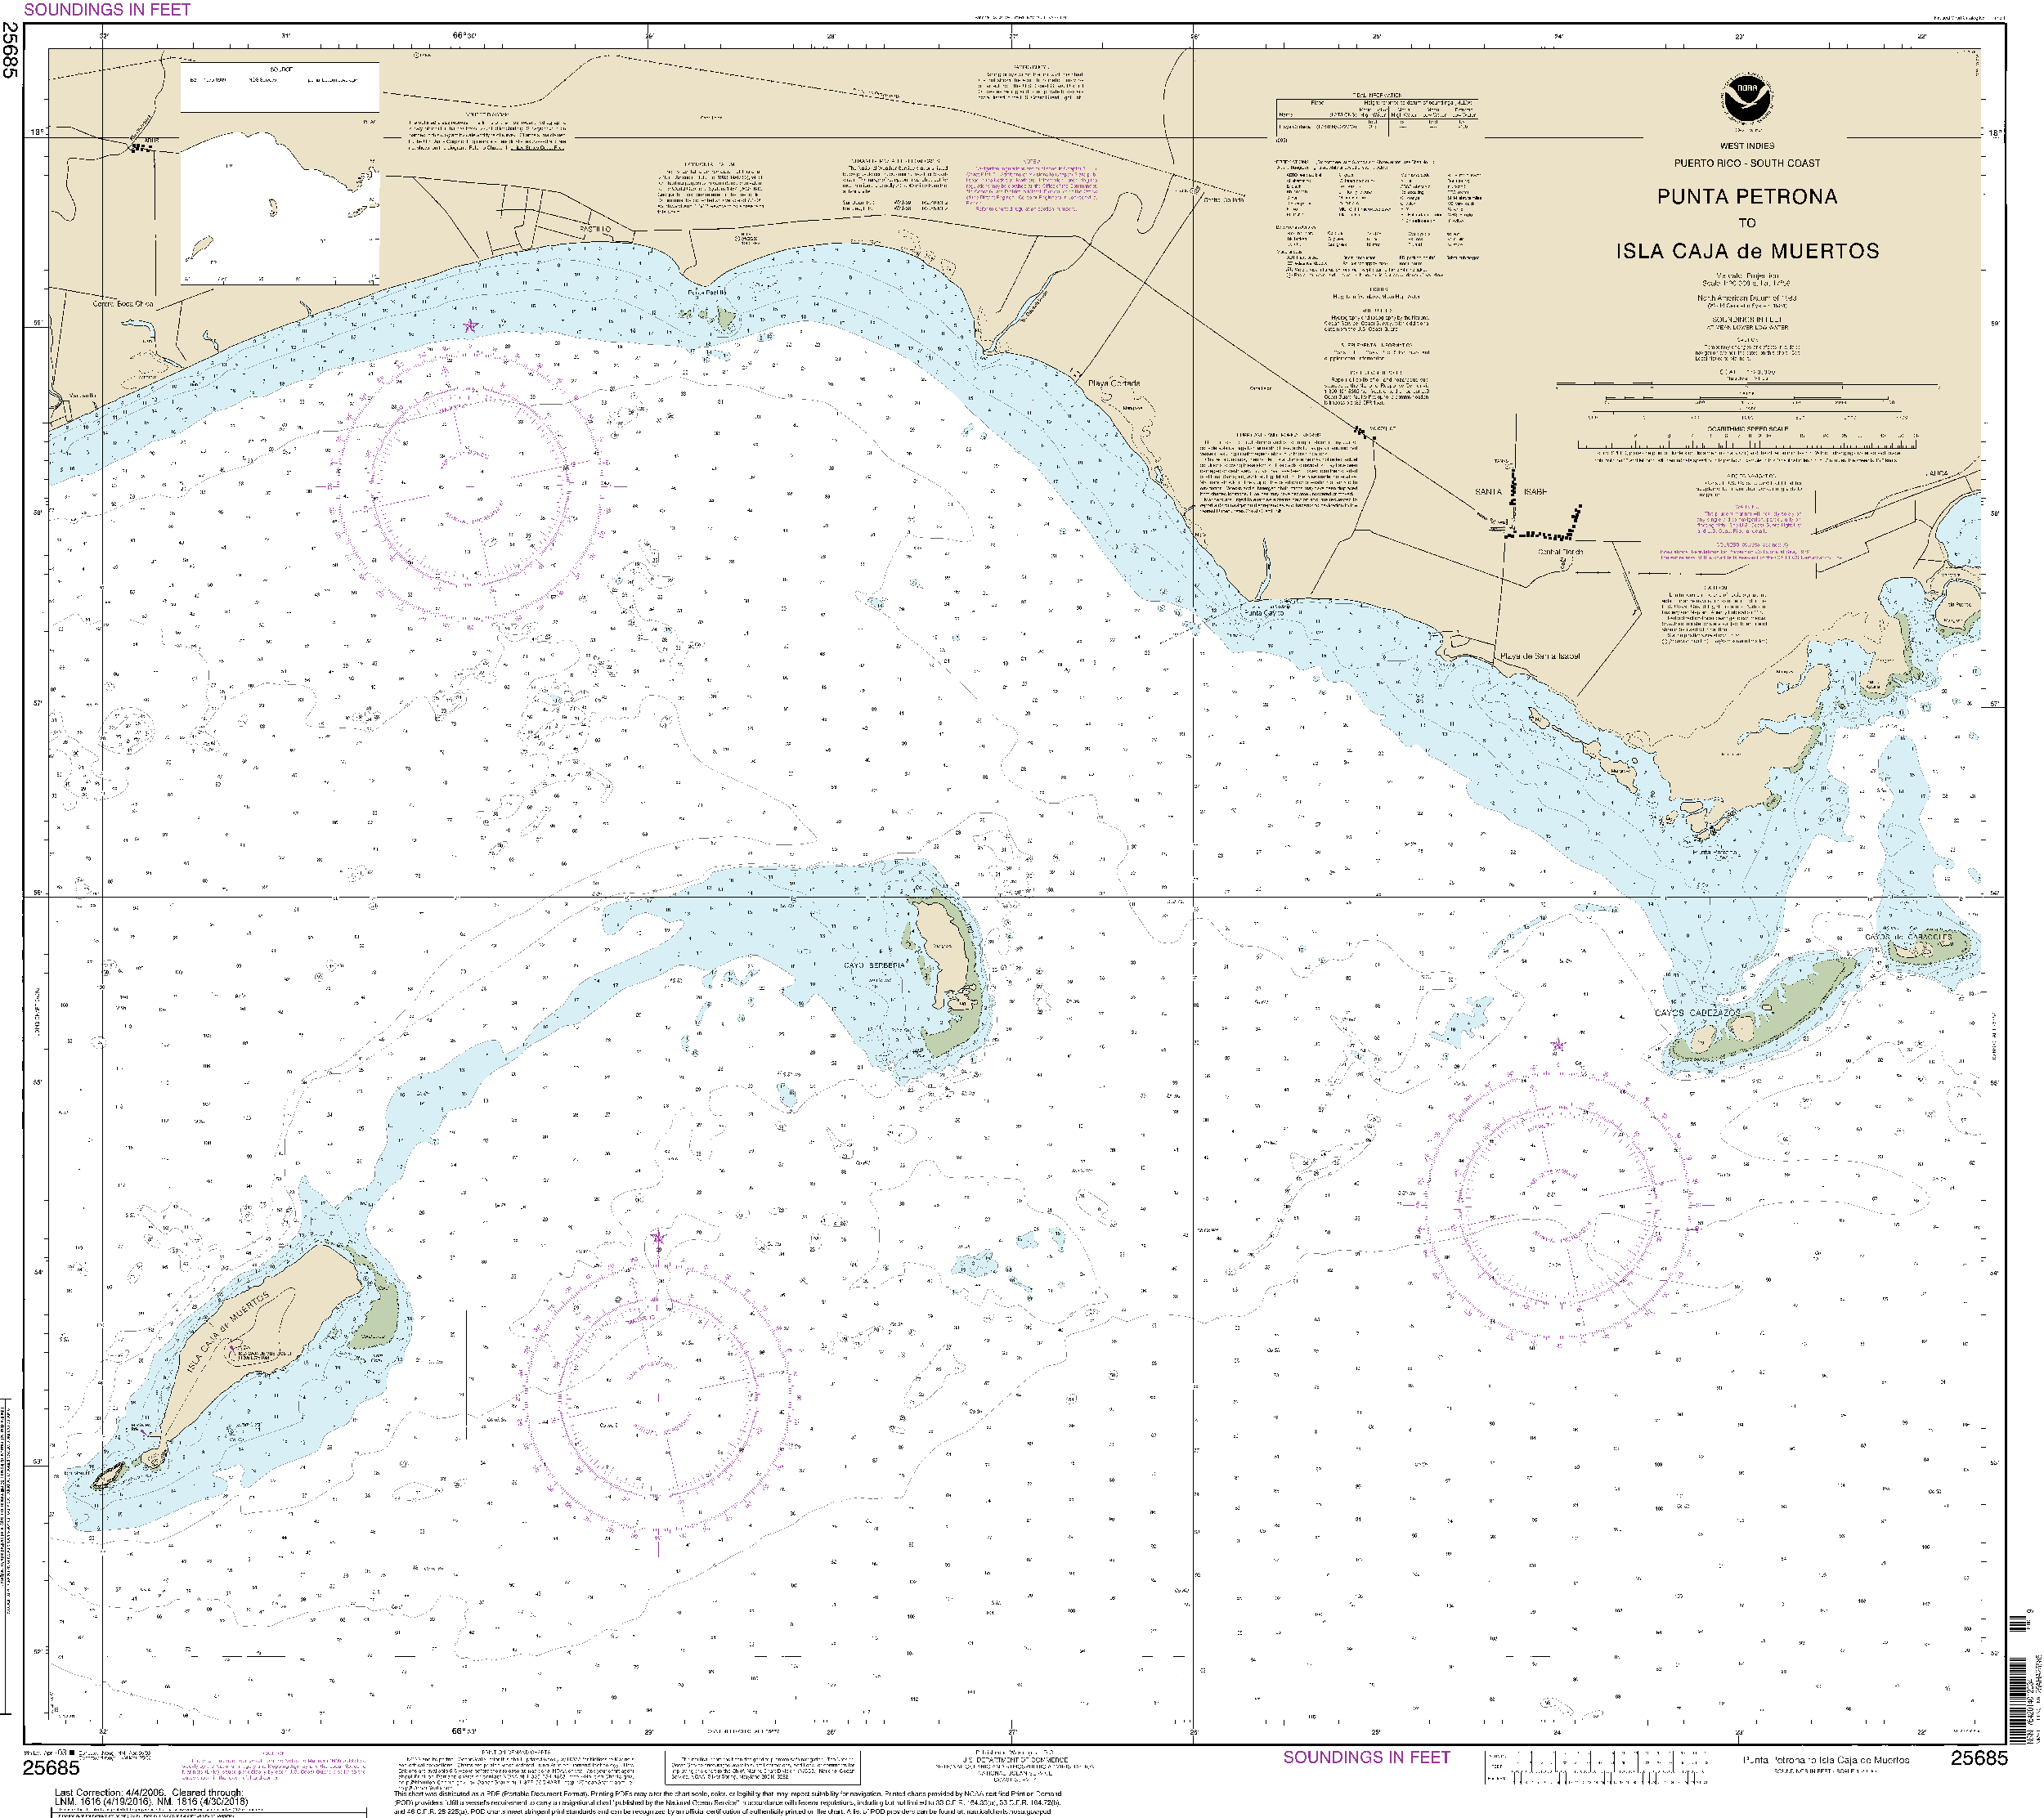 NOAA Nautical Chart 25685: Punta Petrona to lsla Caja de Muertos